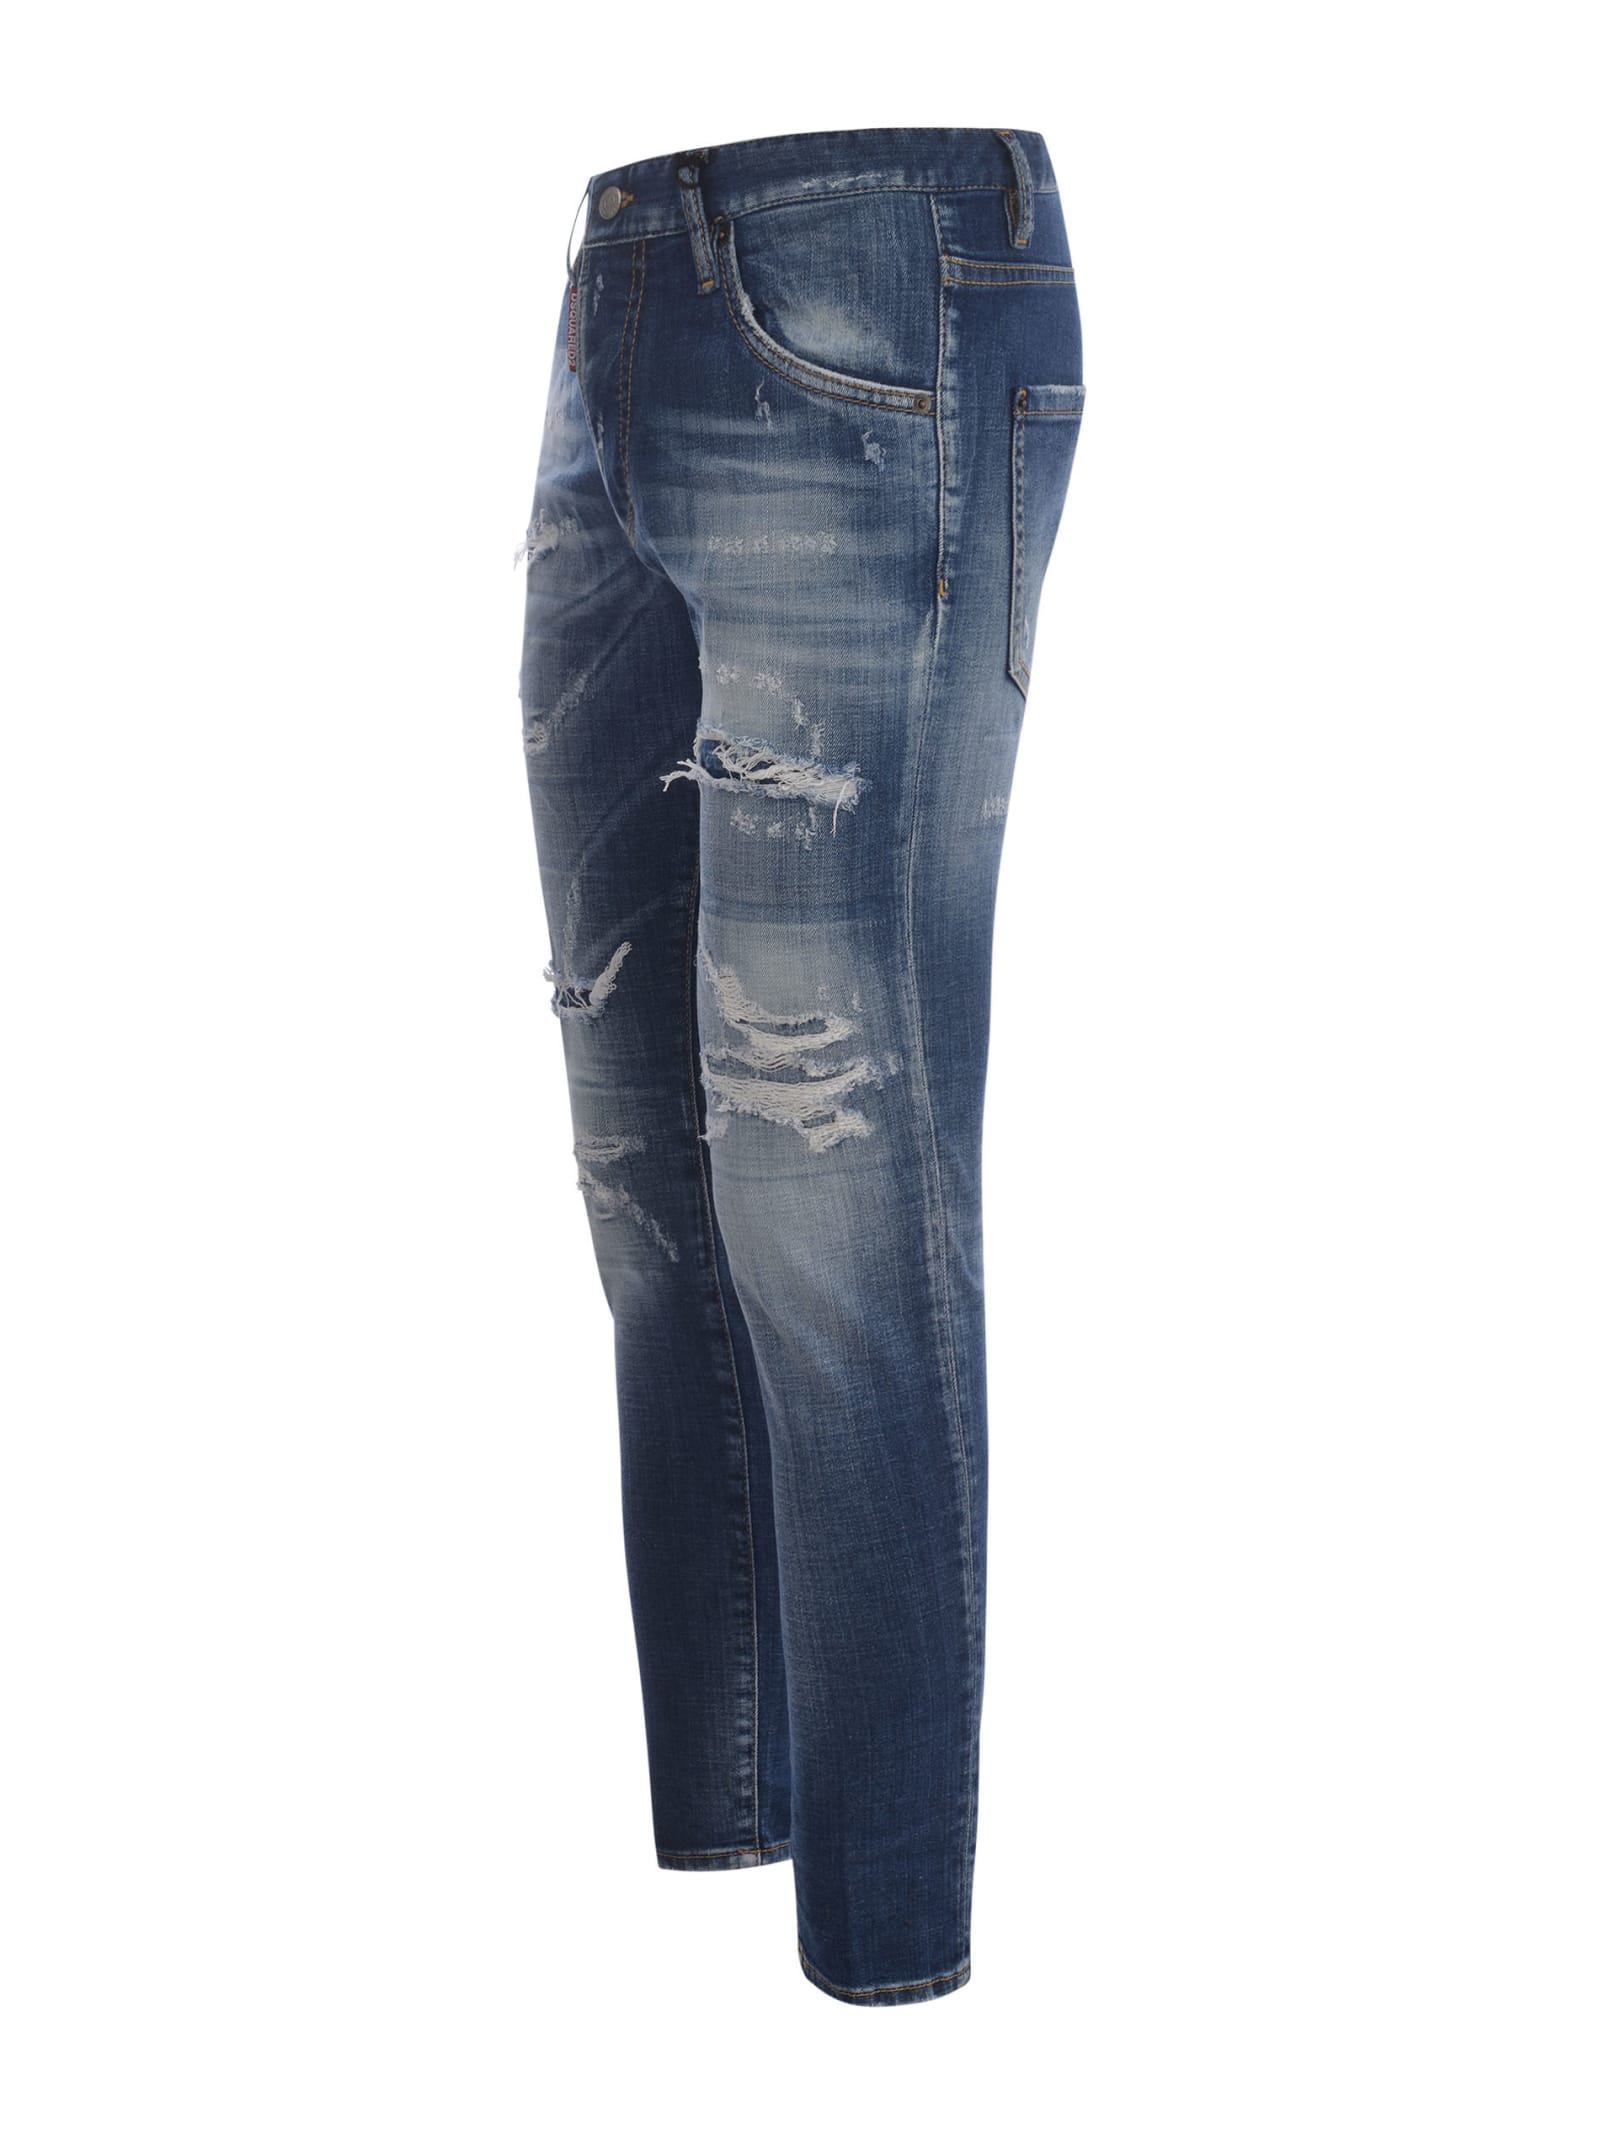 Shop Dsquared2 Jeans  Skinny Dan Jean In Denim Available Store Pompei